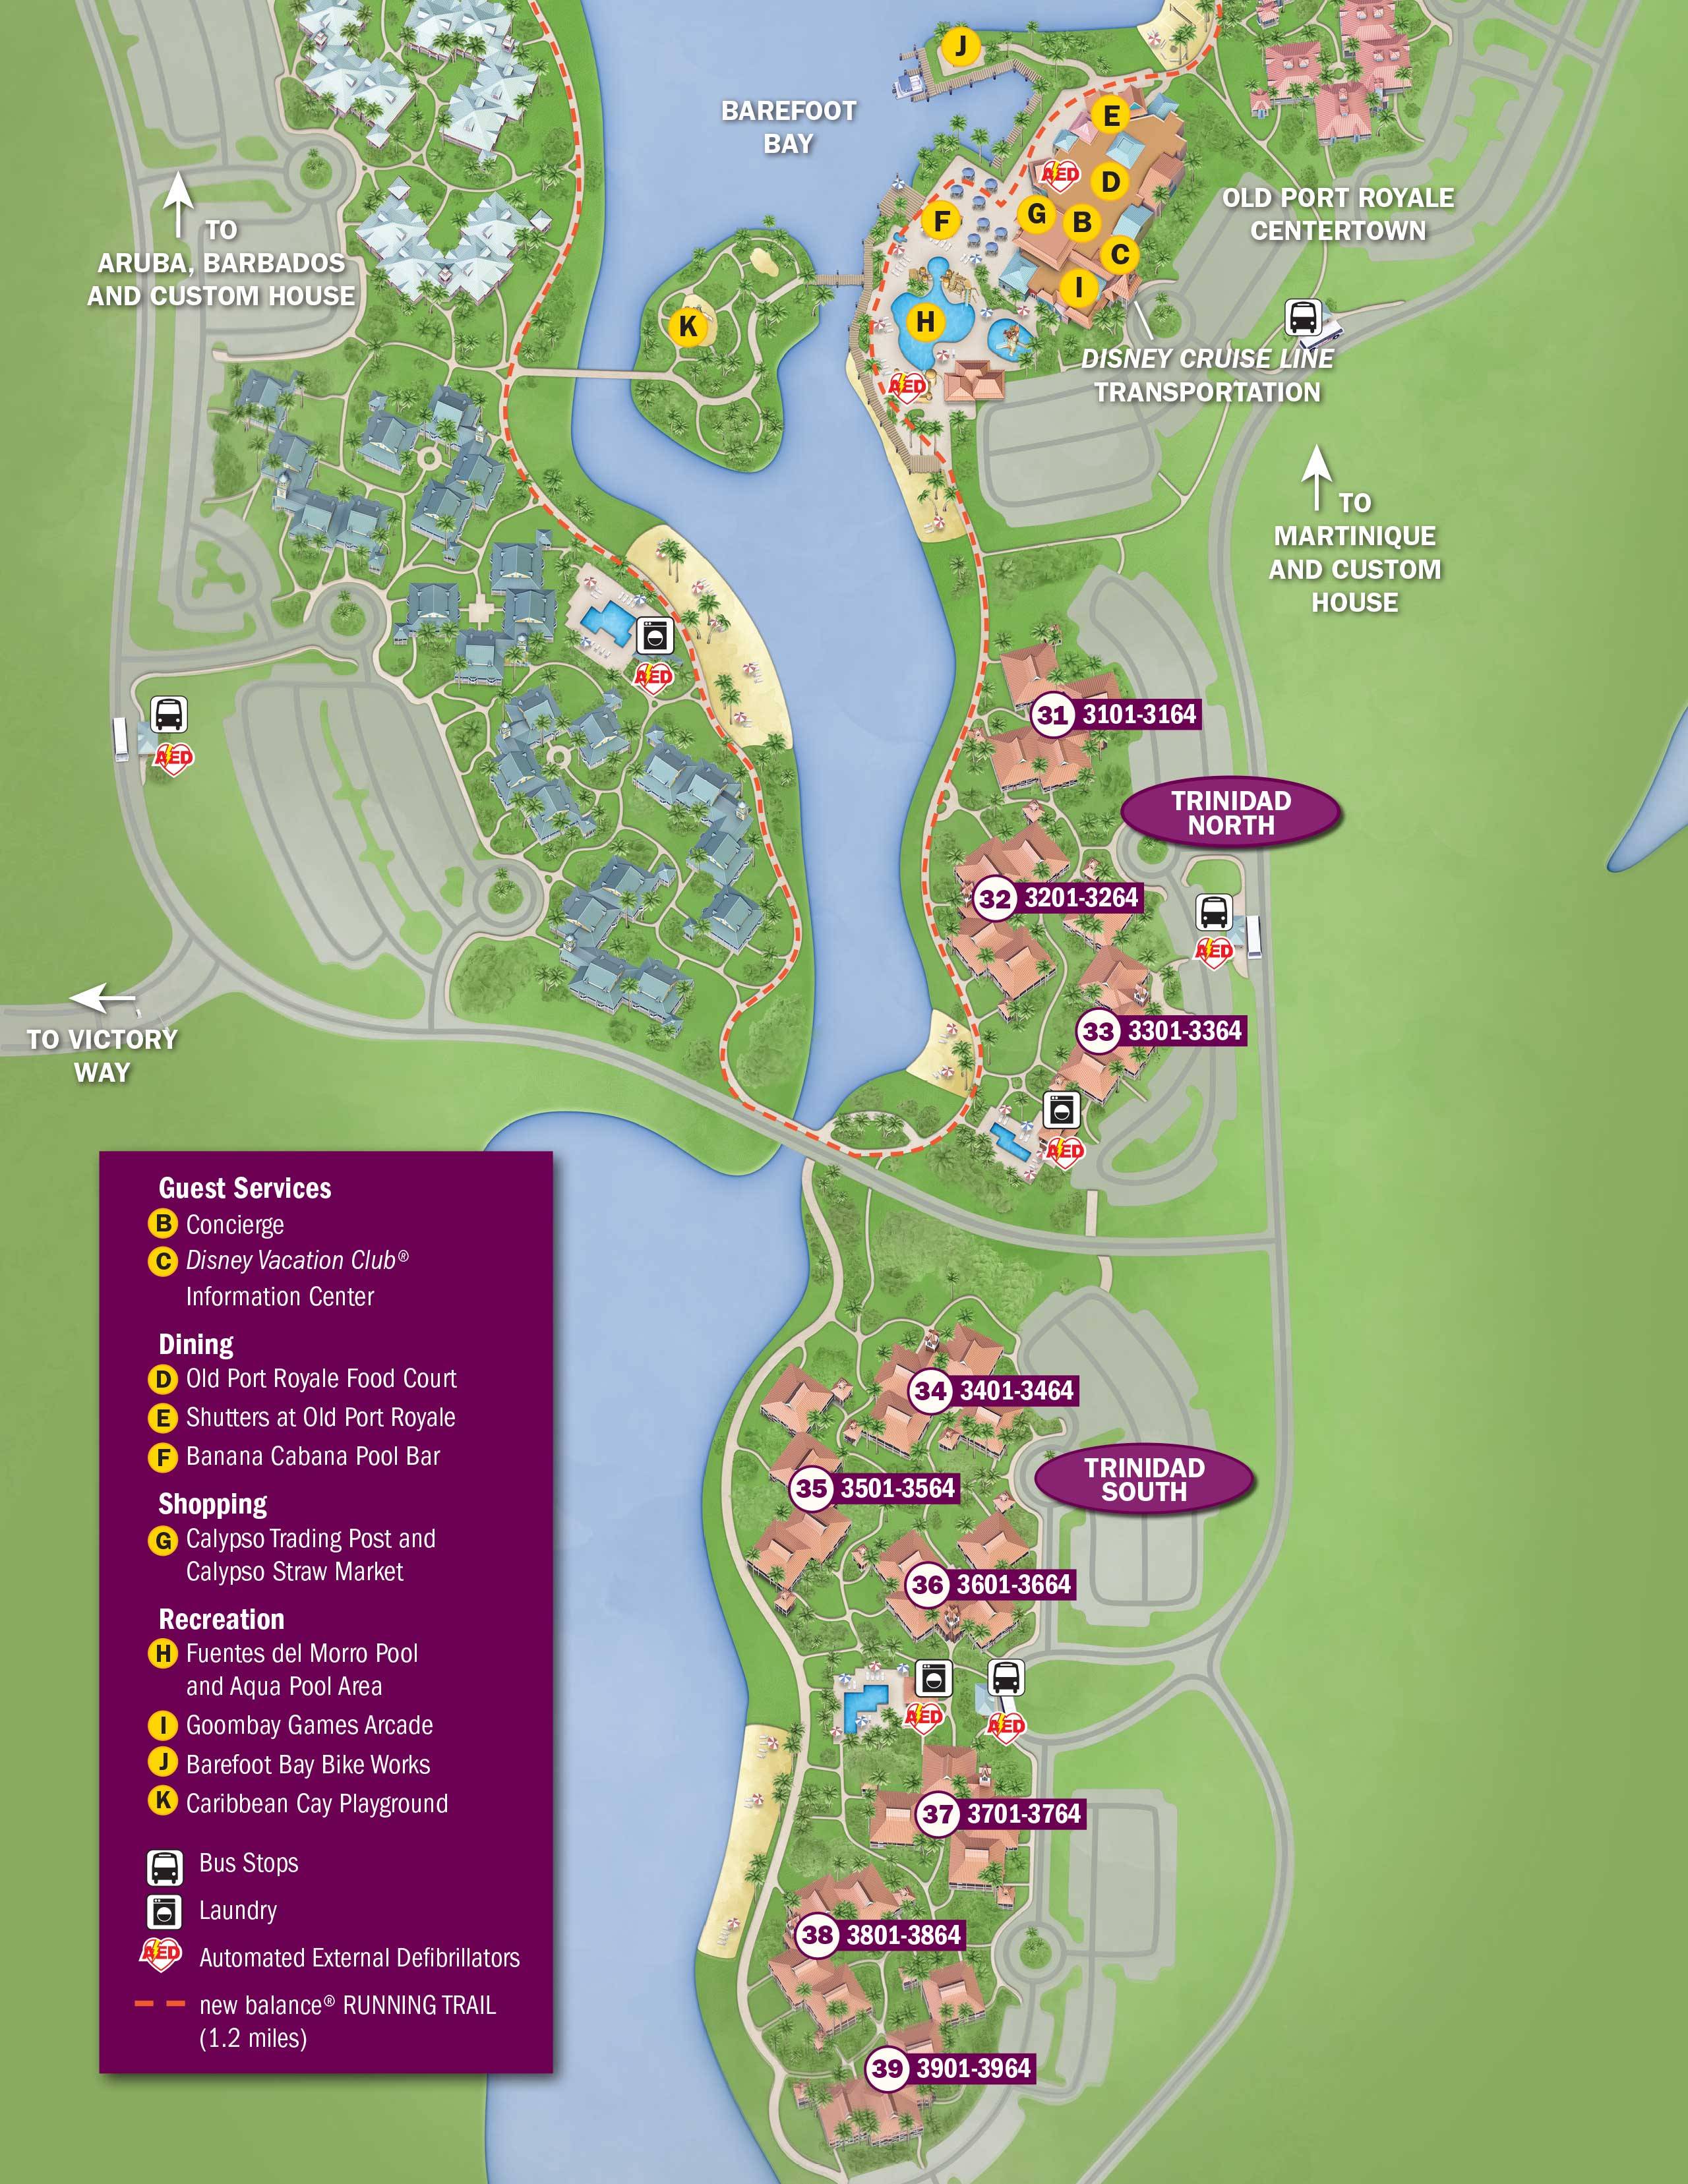 Disney's Caribbean Beach Resort map - Trinidad North and Trinidad South